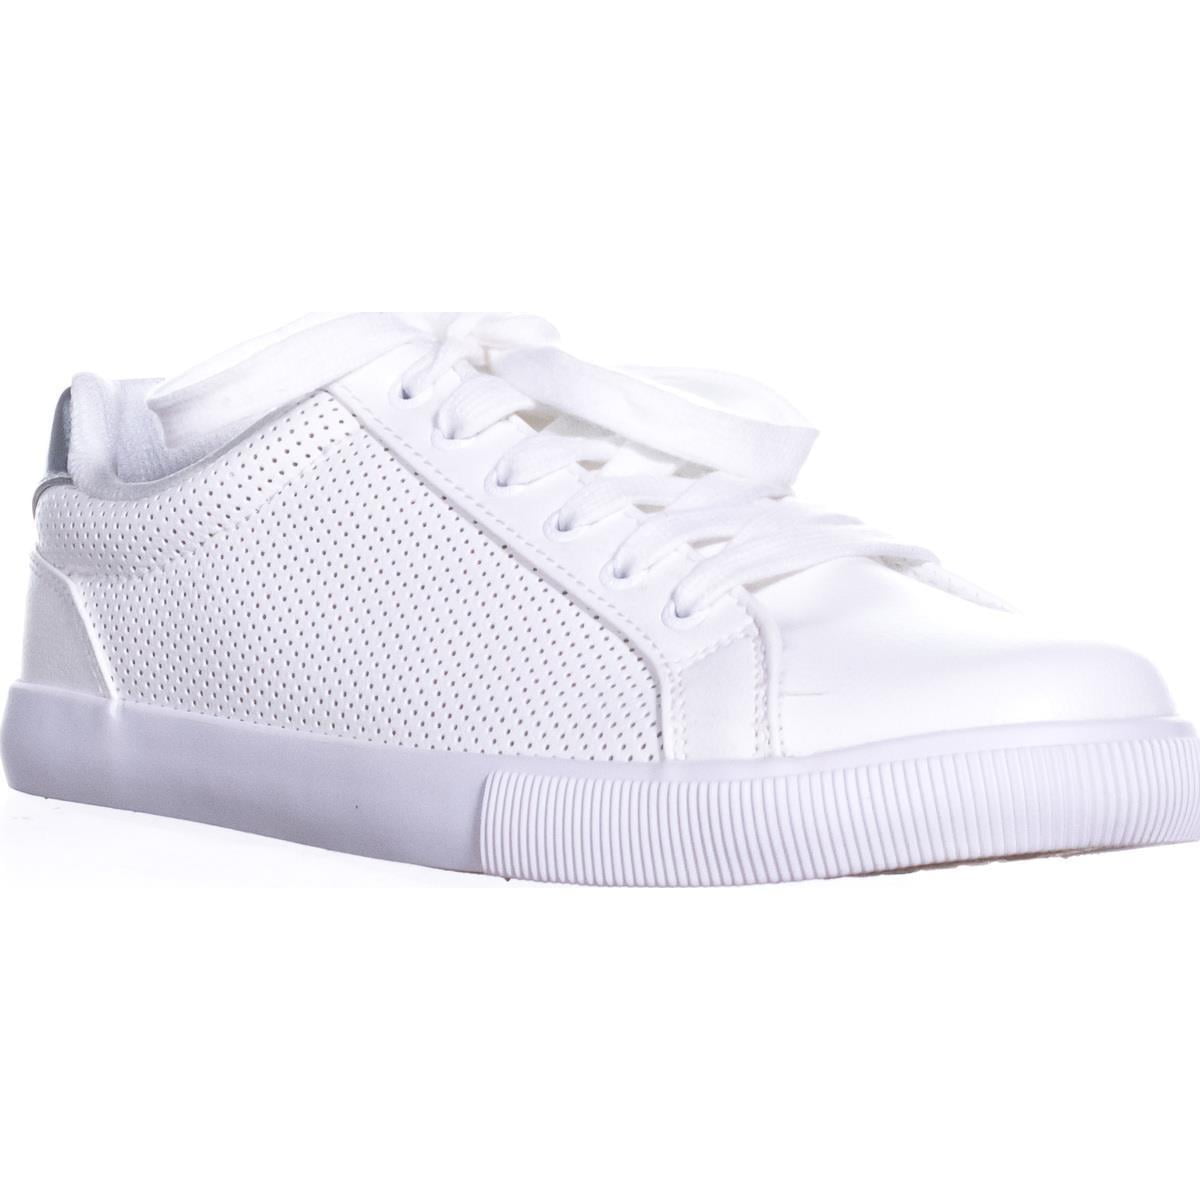 Nautica Steam Sneakers Women's Shoes Size 6.5 White | eBay